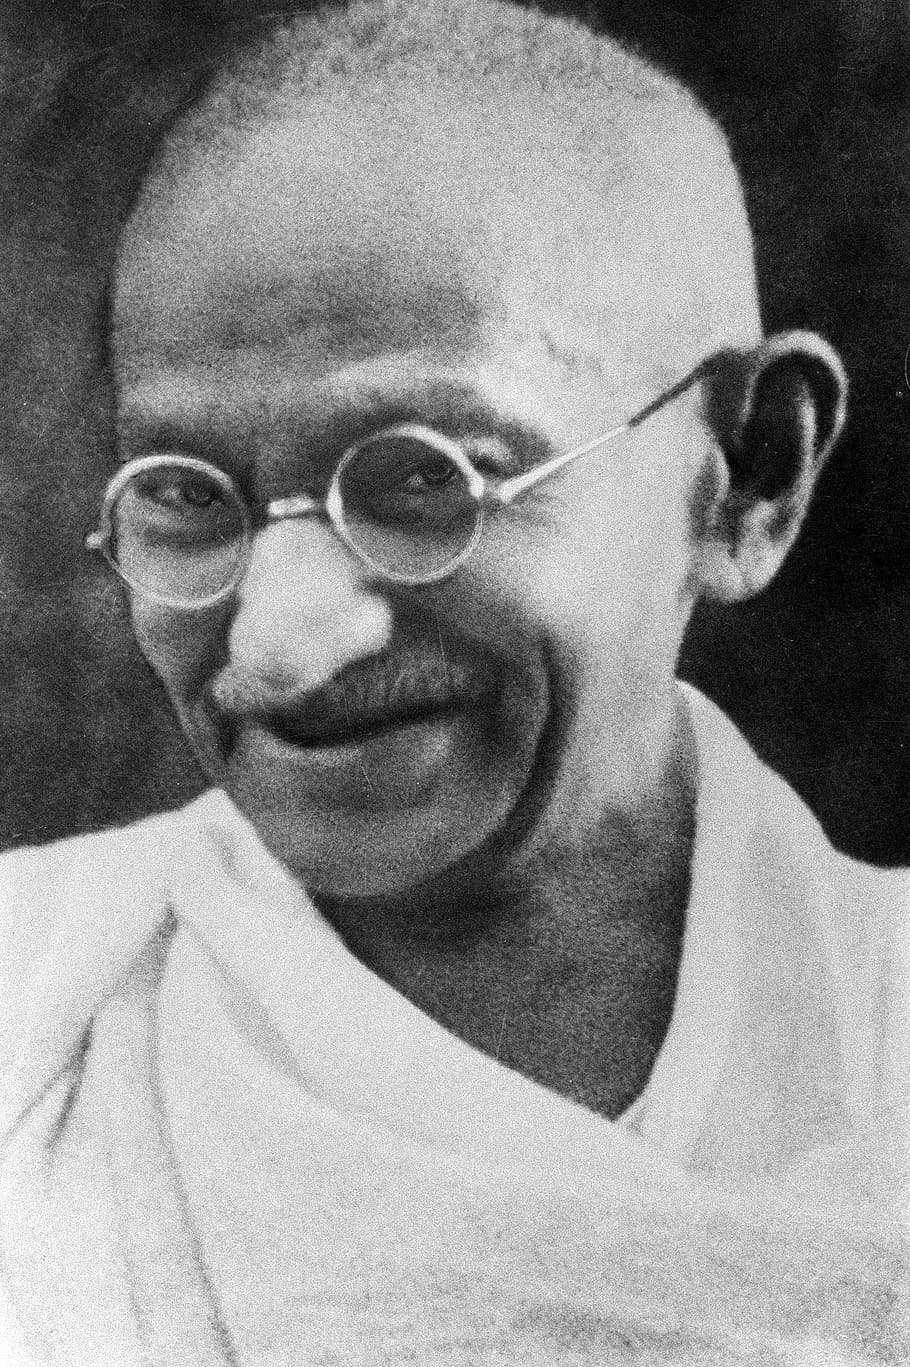 HD wallpaper: Mahatma Gandhi, pacifist, mohandas karamchand gandhi ...